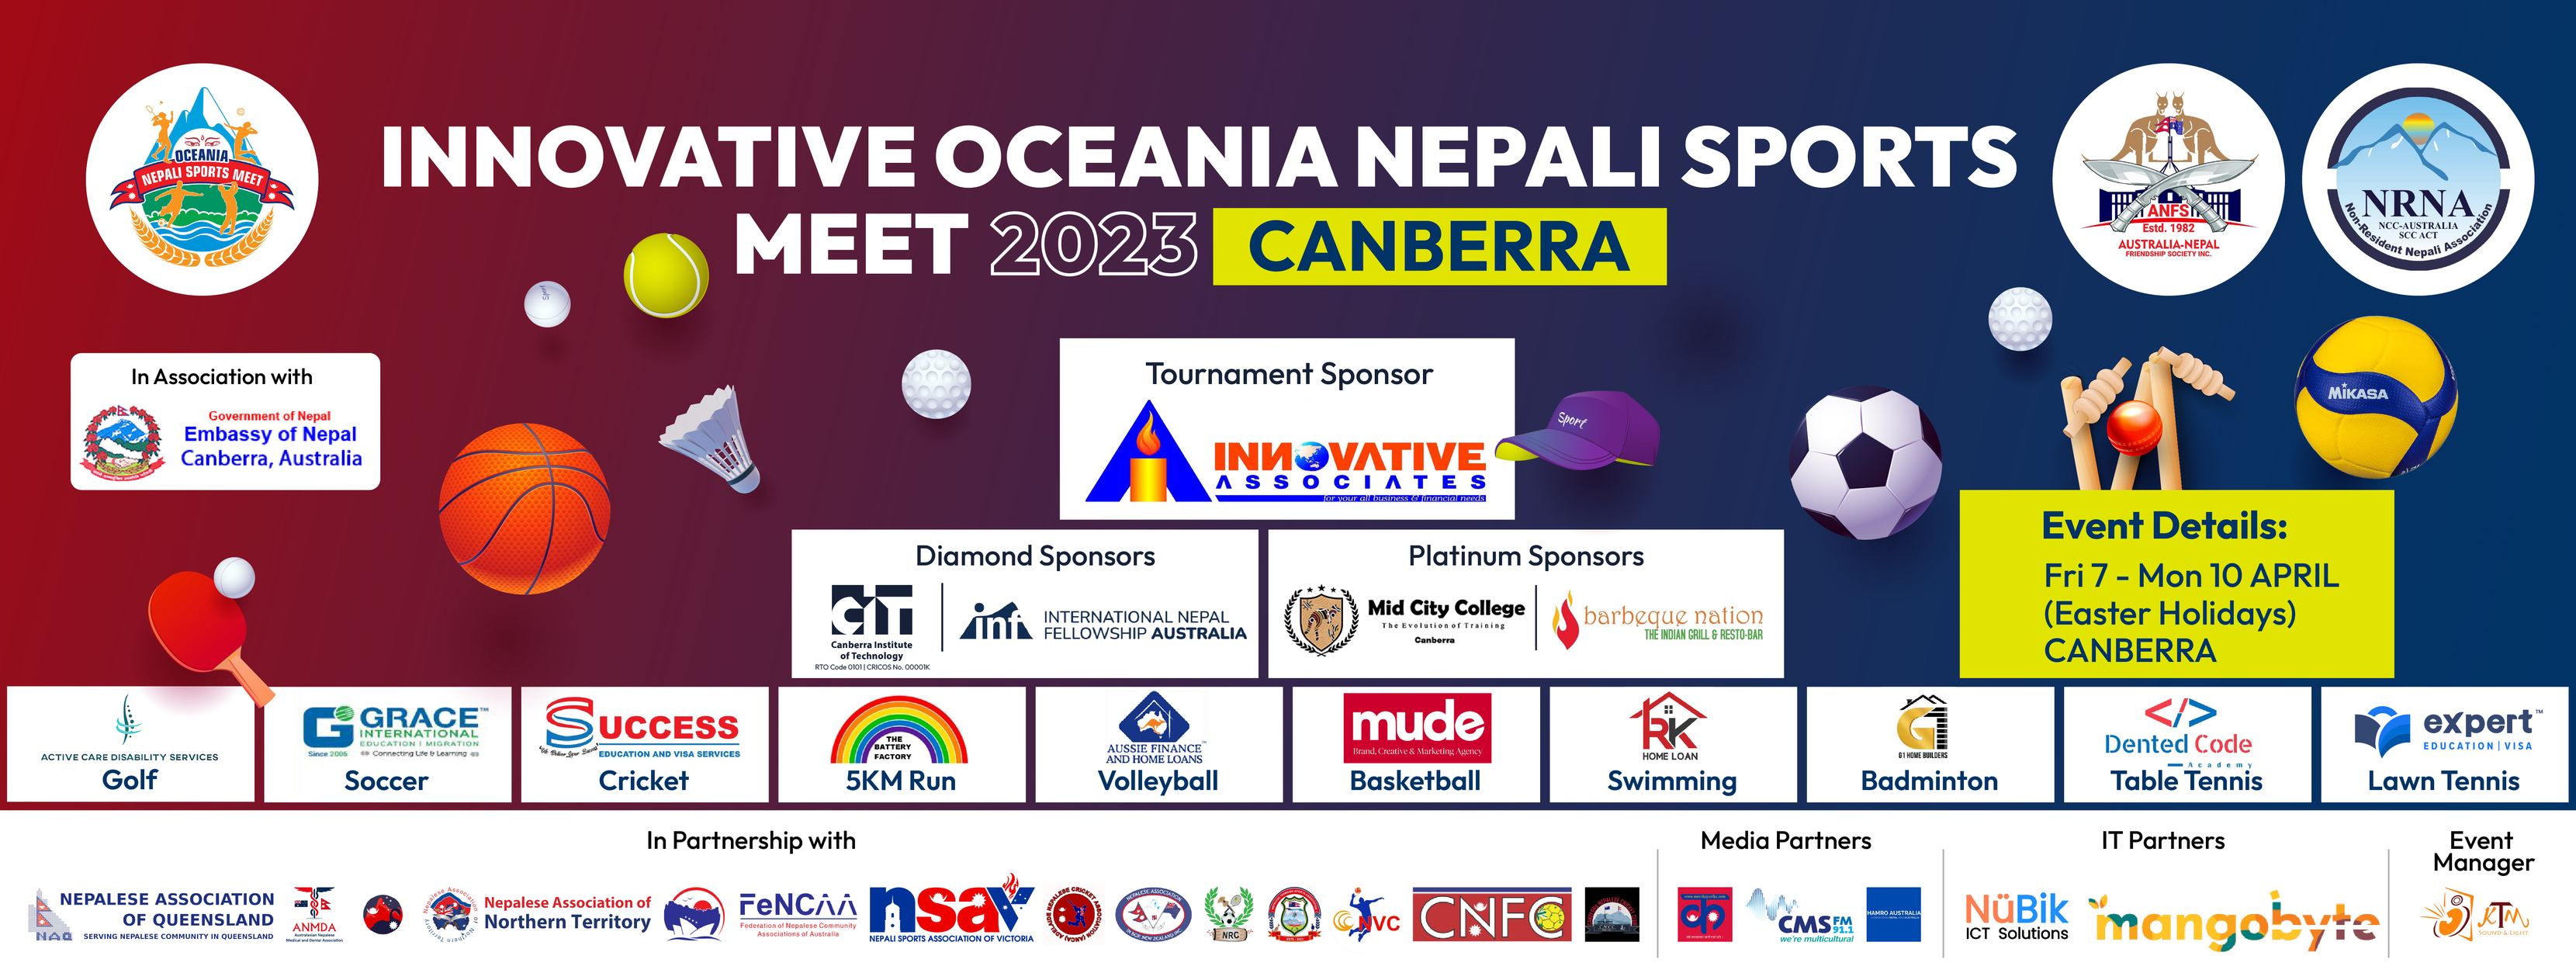 INNOVATIVE OCEANIA NEPALI SPORTS MEET 2023 CANBERRA